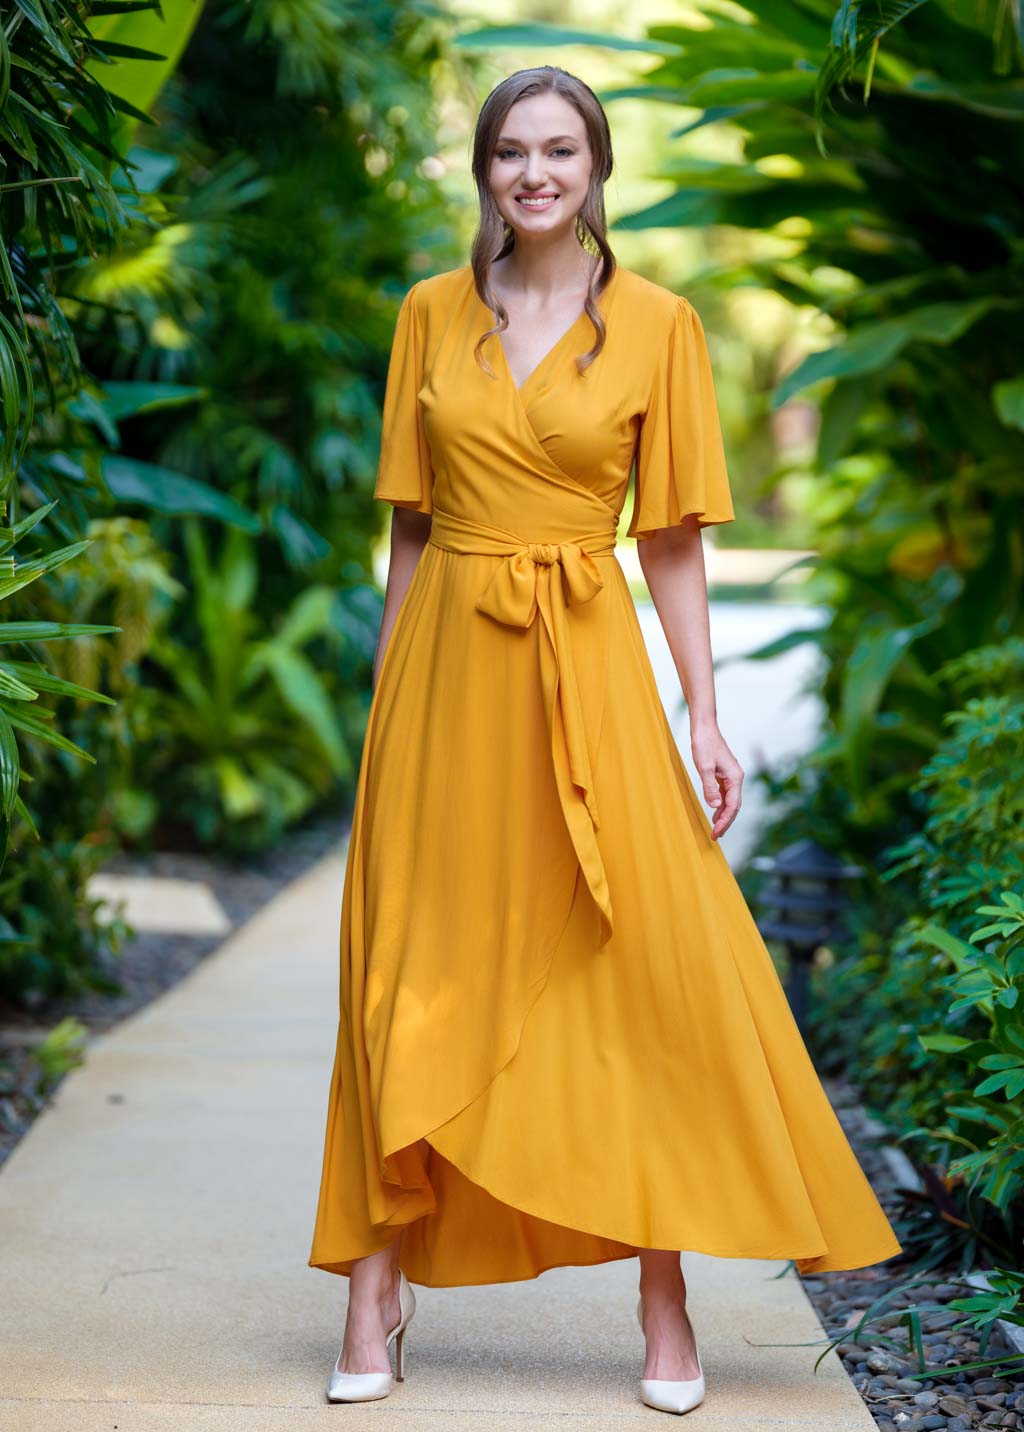 Honey yellow romantic wrap dress